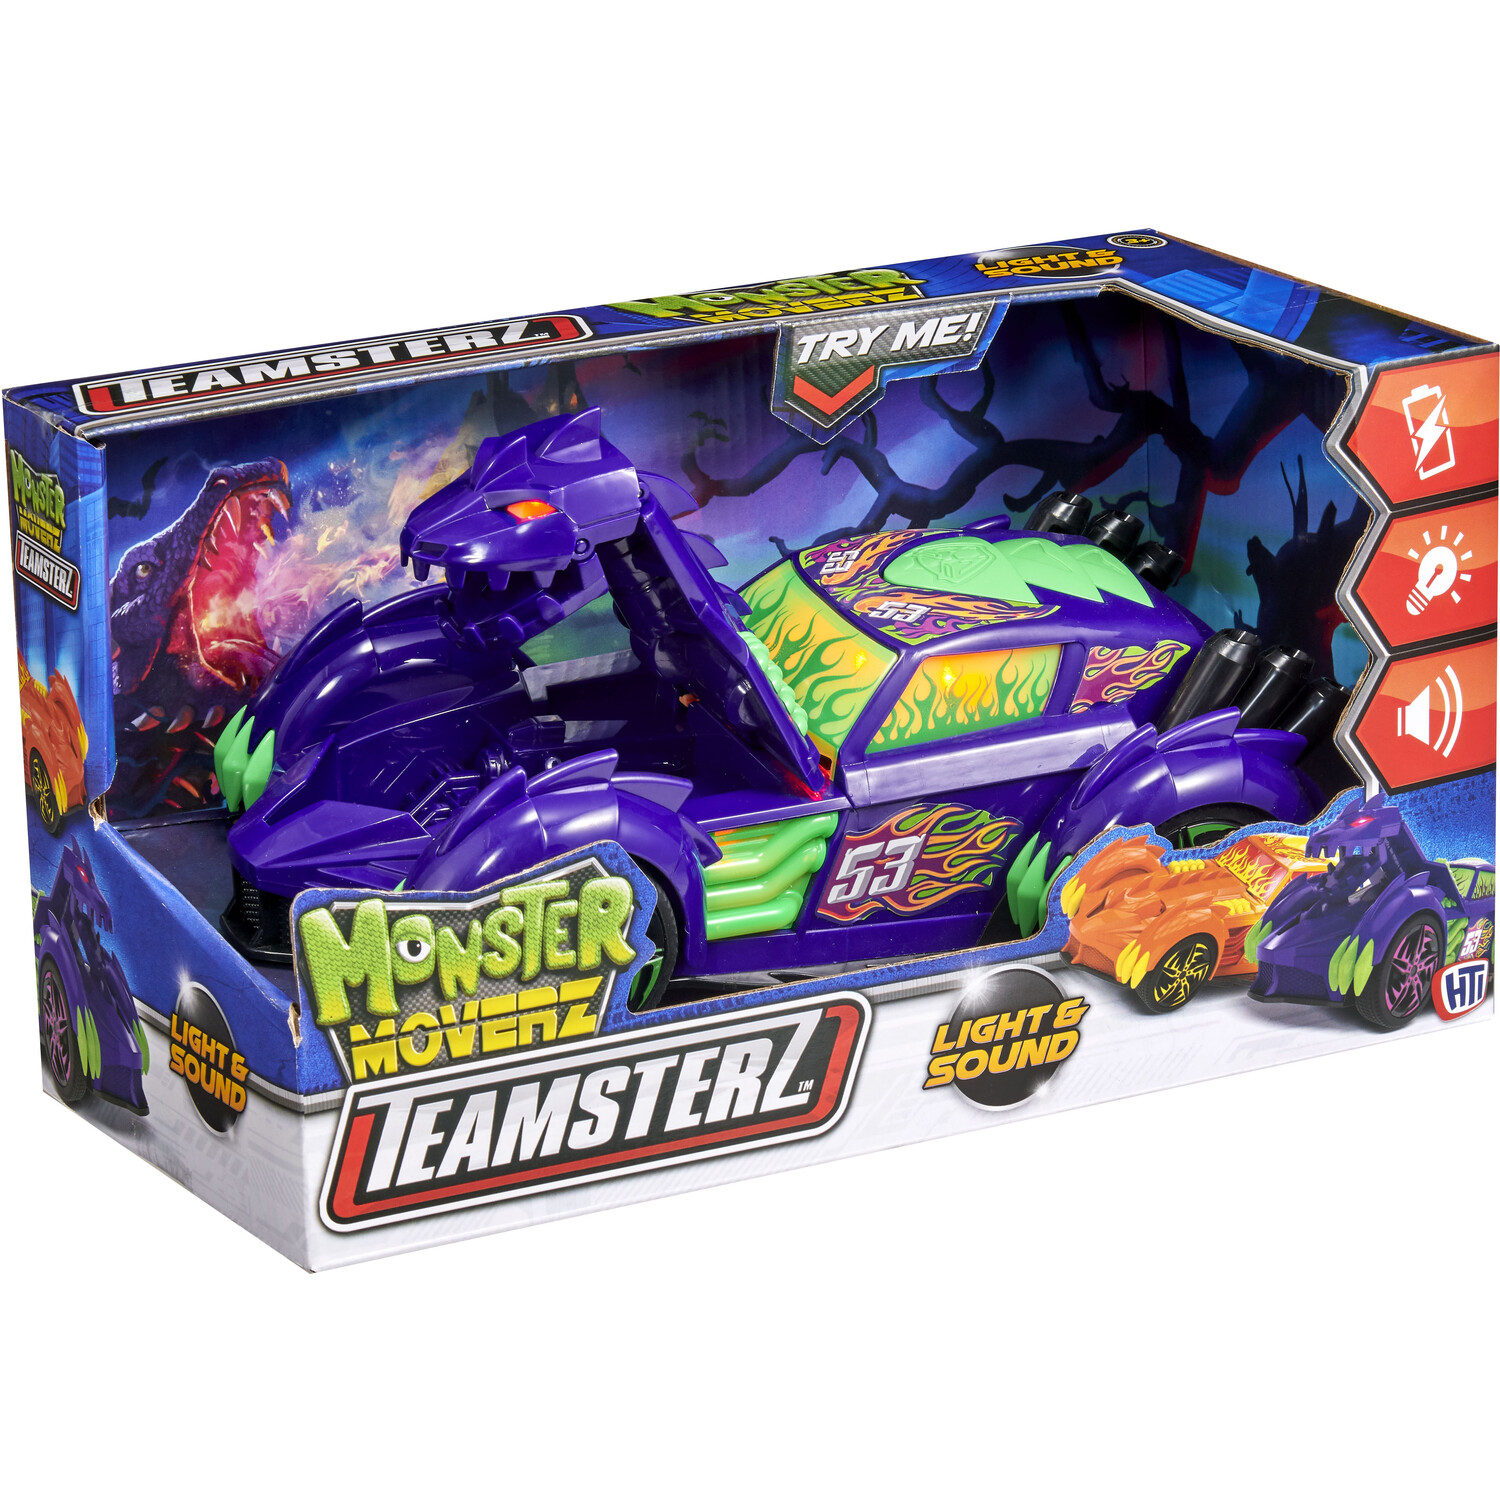 Teamsterz Monster Moverz Monster Converterz Image 3